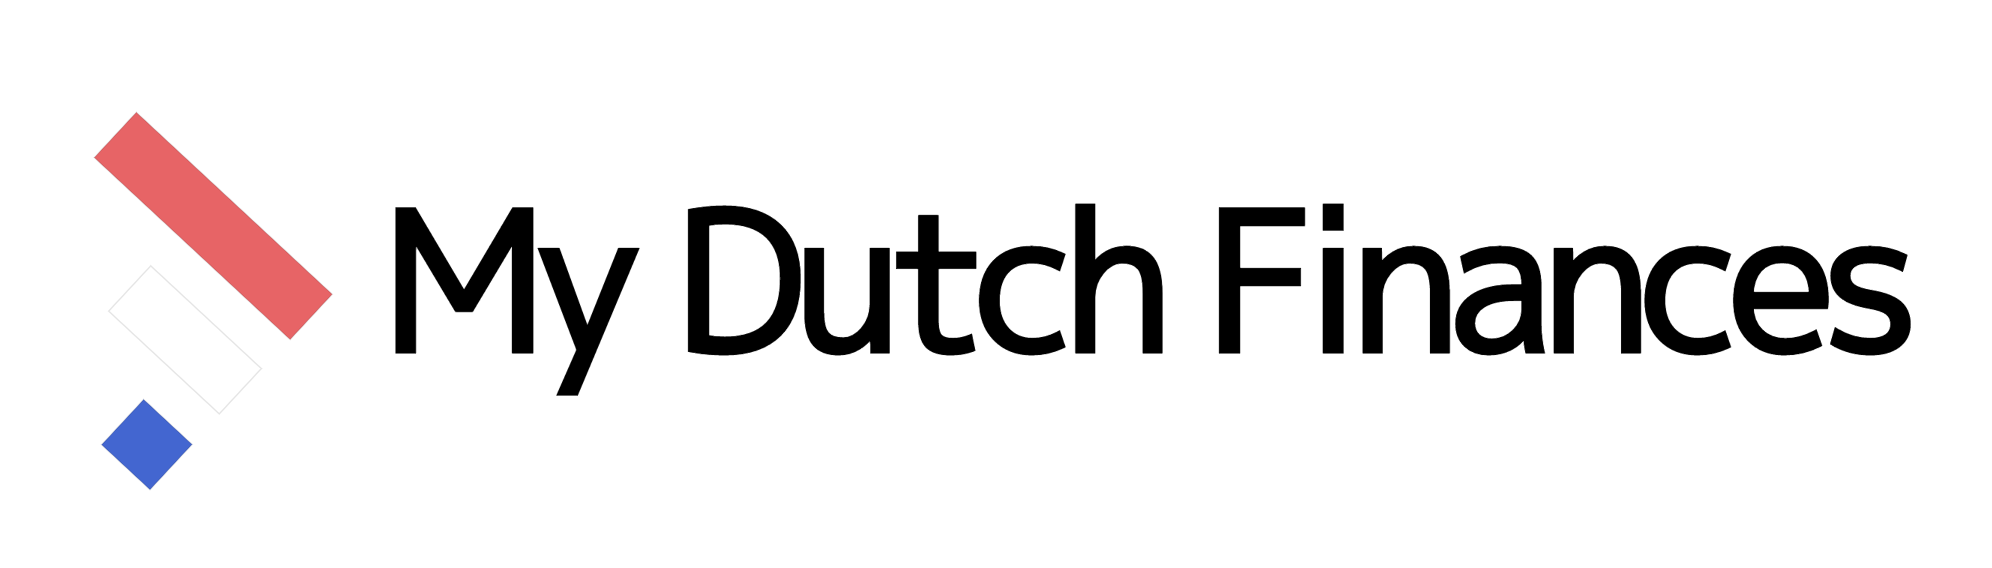 My Dutch Finances Logo